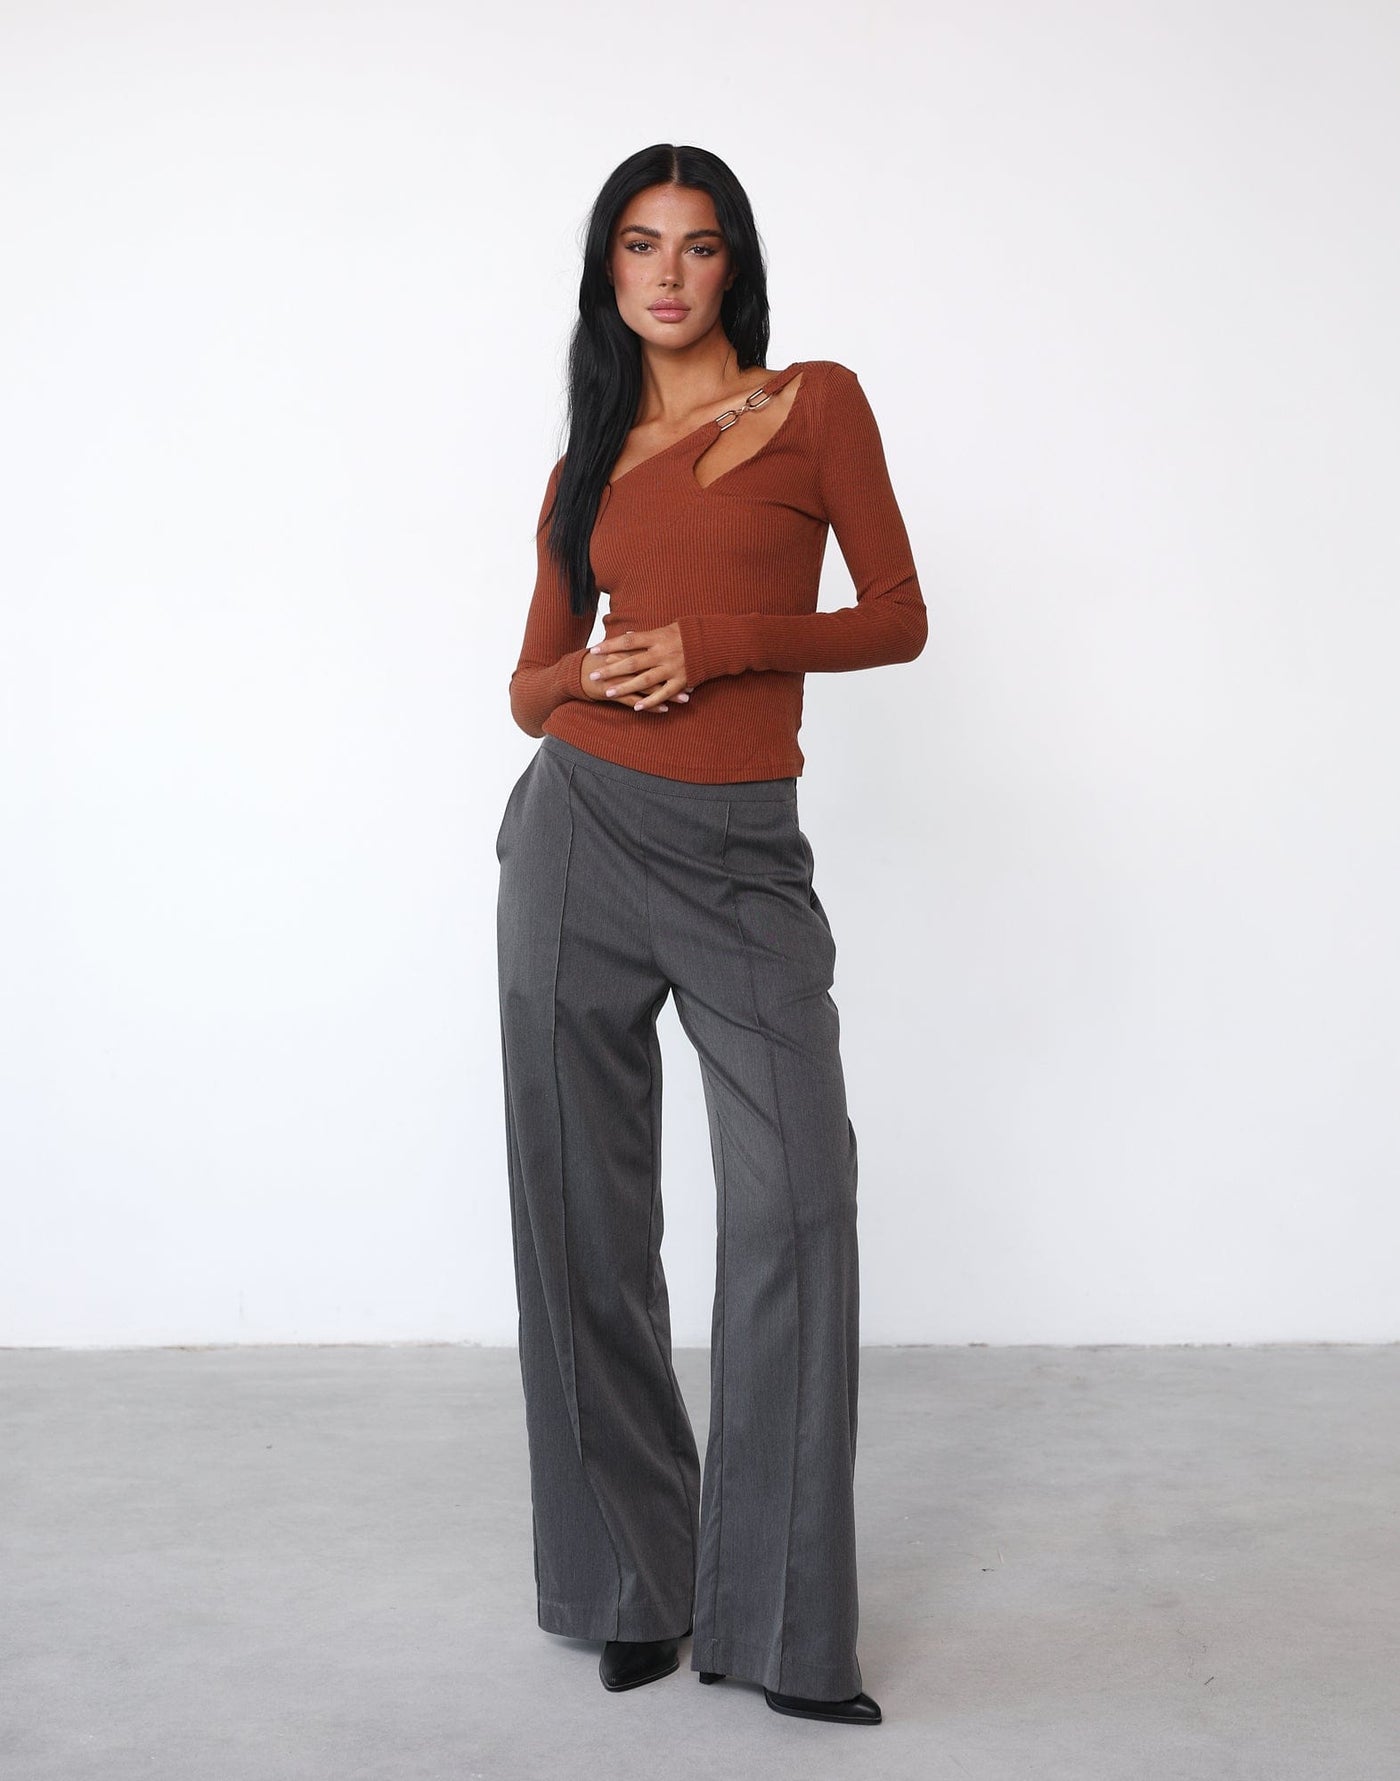 Snoh Long Sleeve Top (Terracotta) - Rust Asymmetrical Long Sleeve Top - Women's Tops - Charcoal Clothing